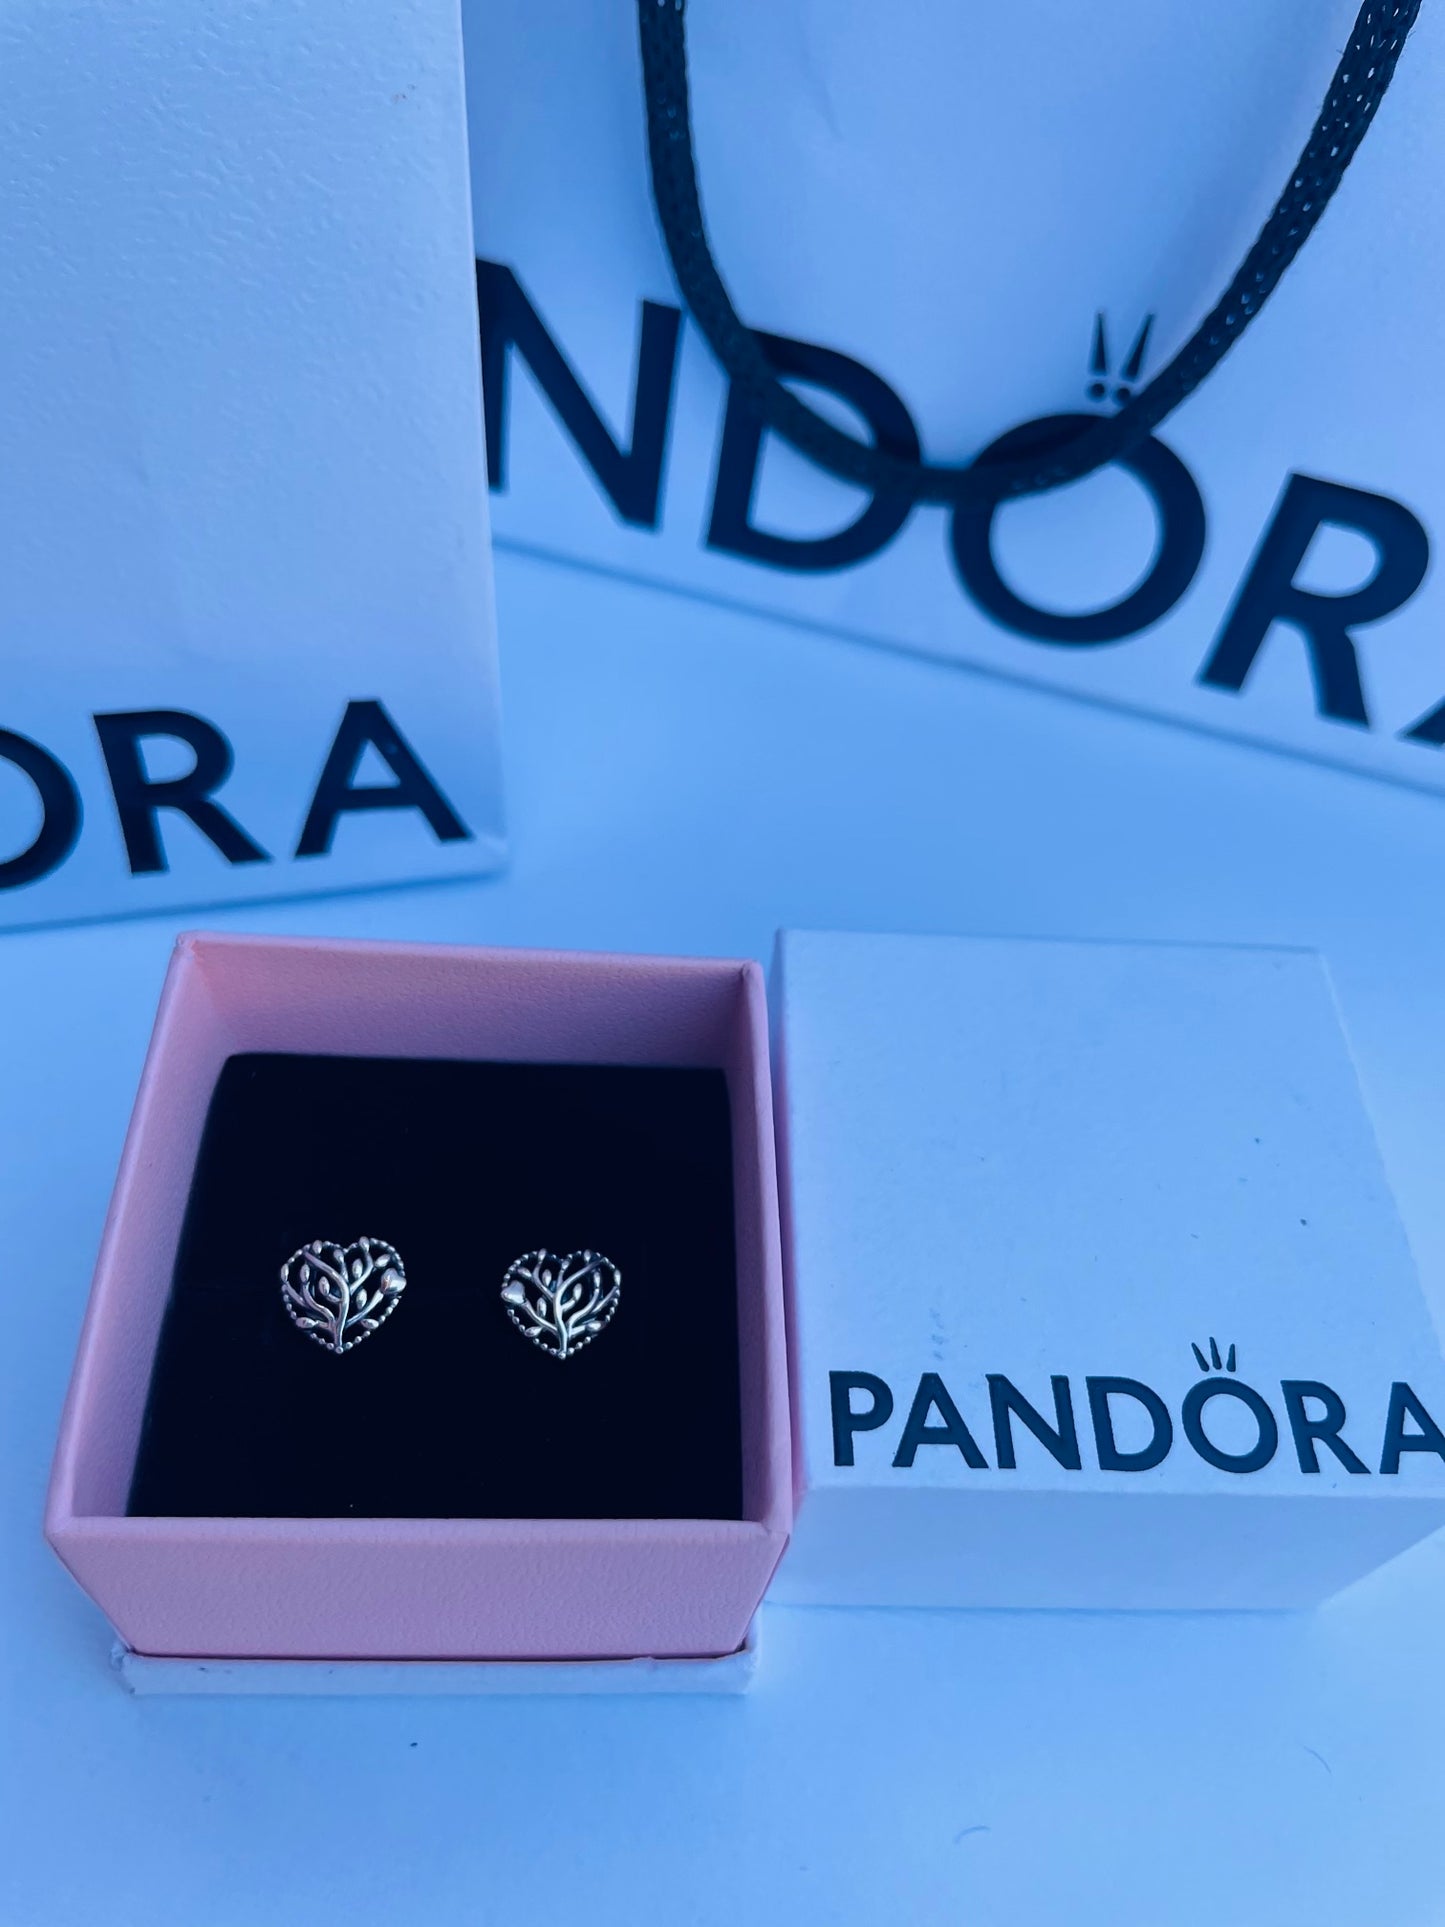 Pandora earrings